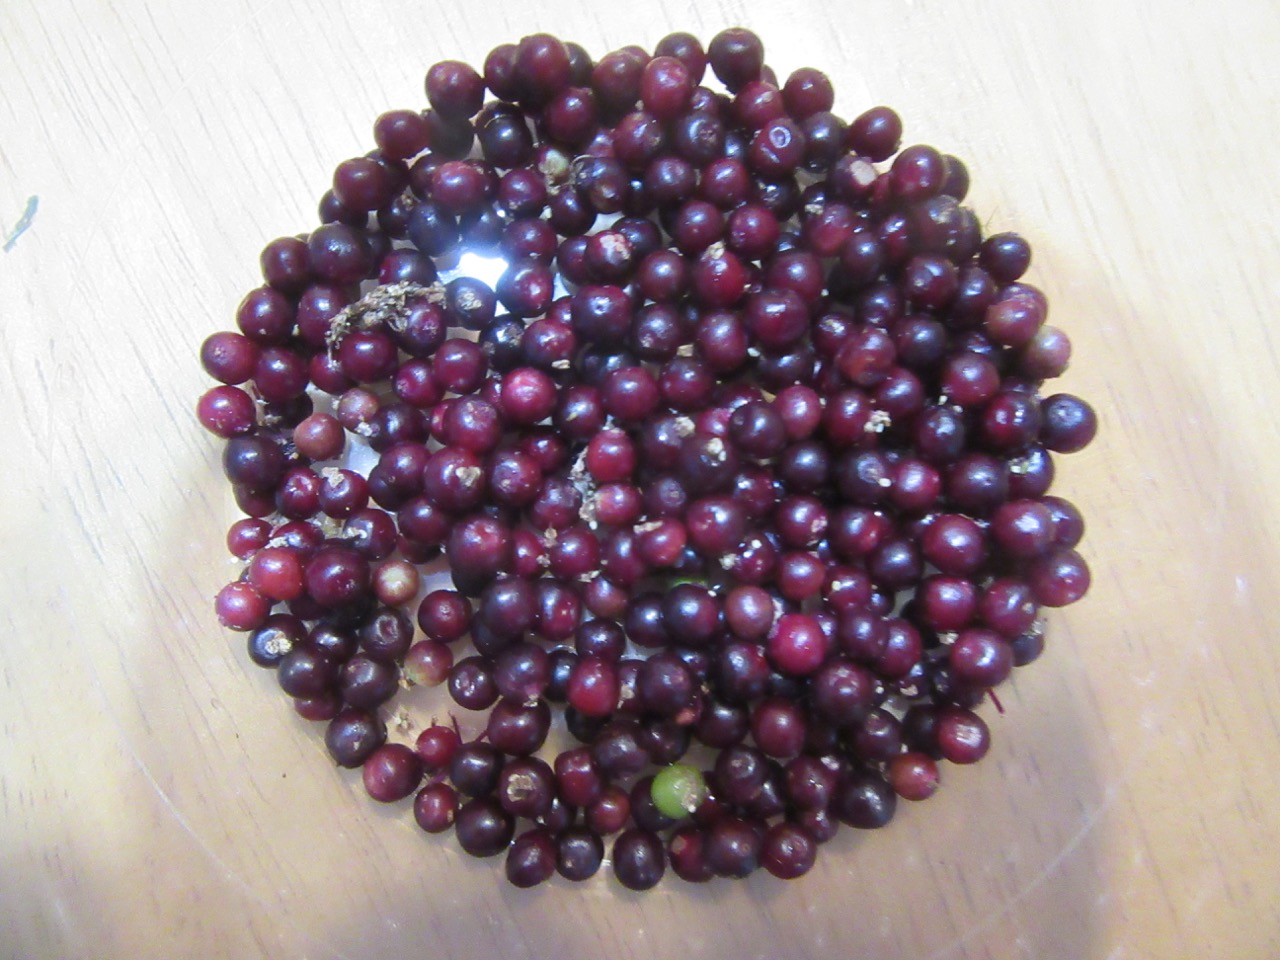 Elderberry harvest 2019